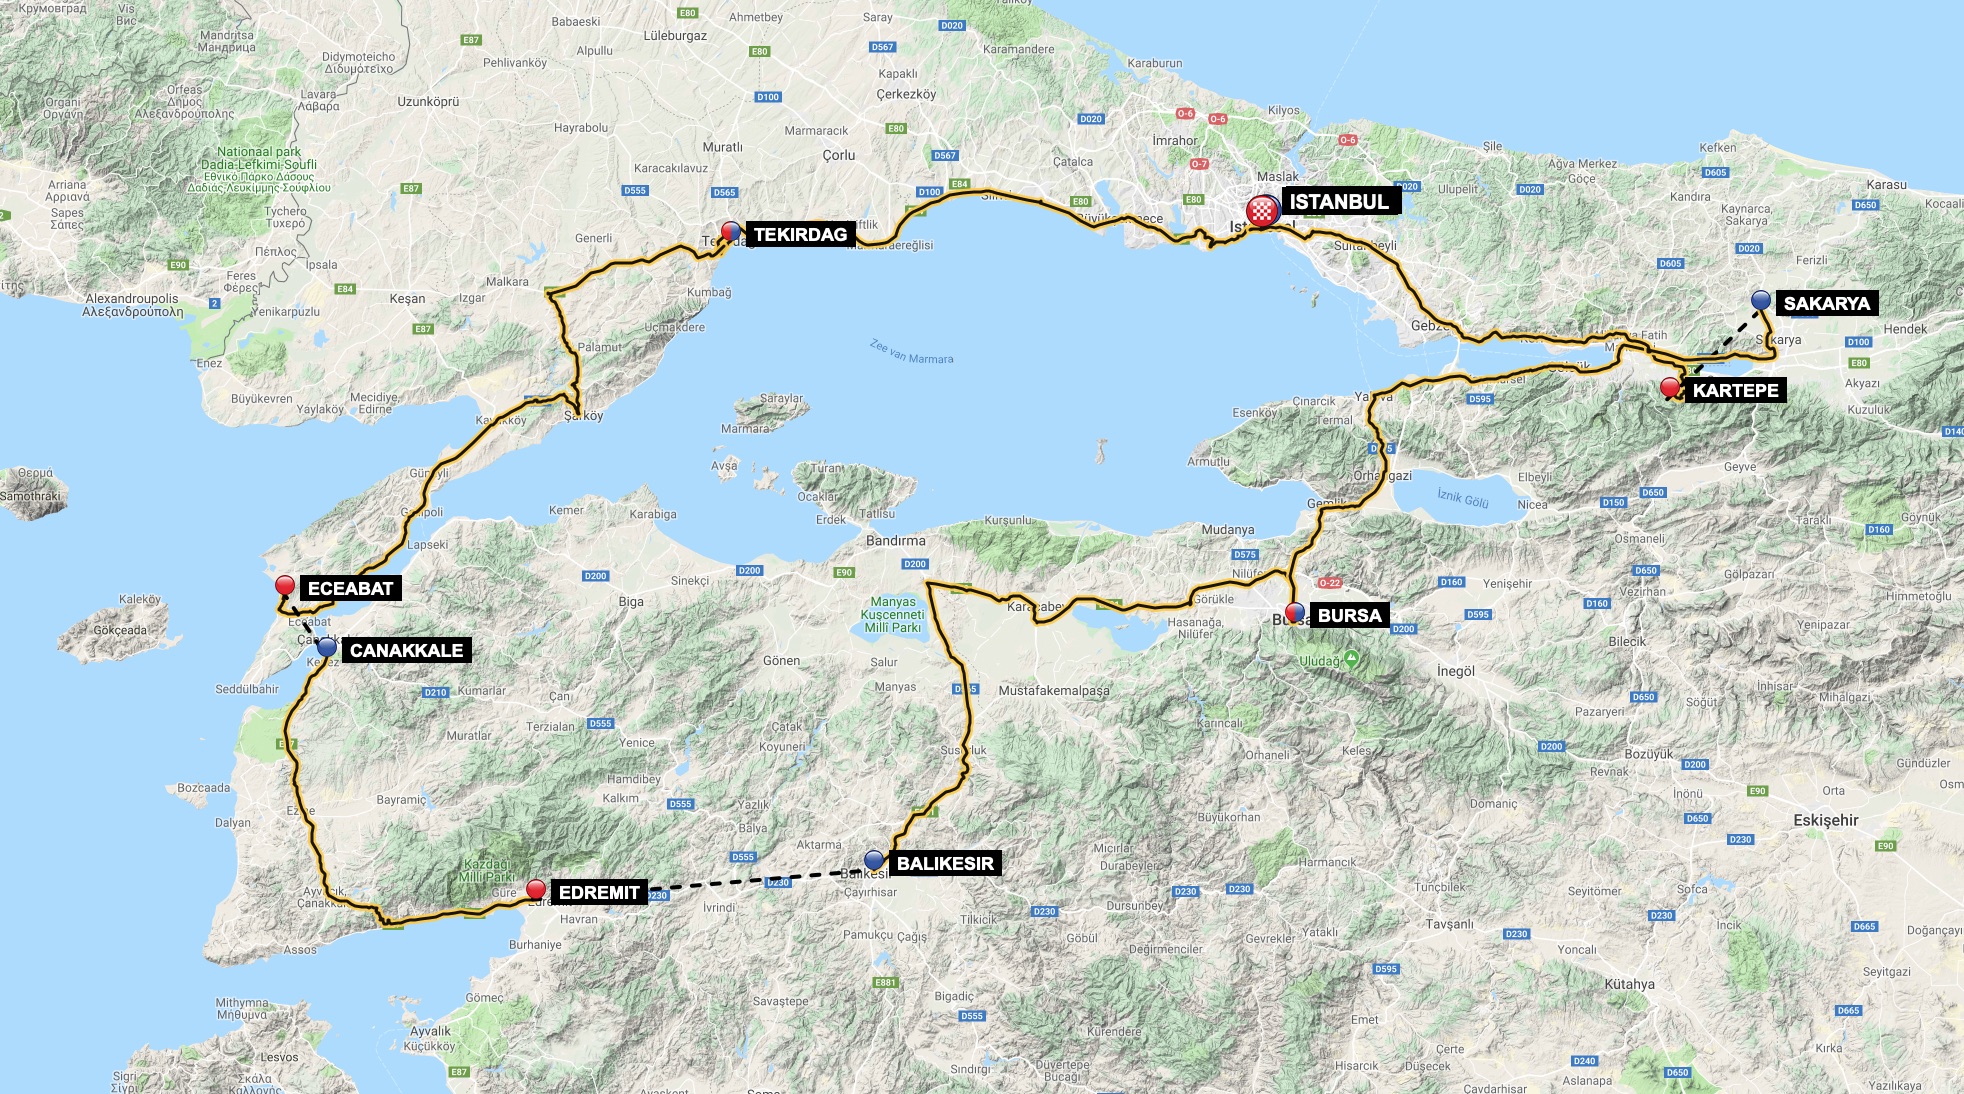 Presidential Cycling Tour of Turkey 2019 Tour-of-turkey-2019-map-b863e74b82